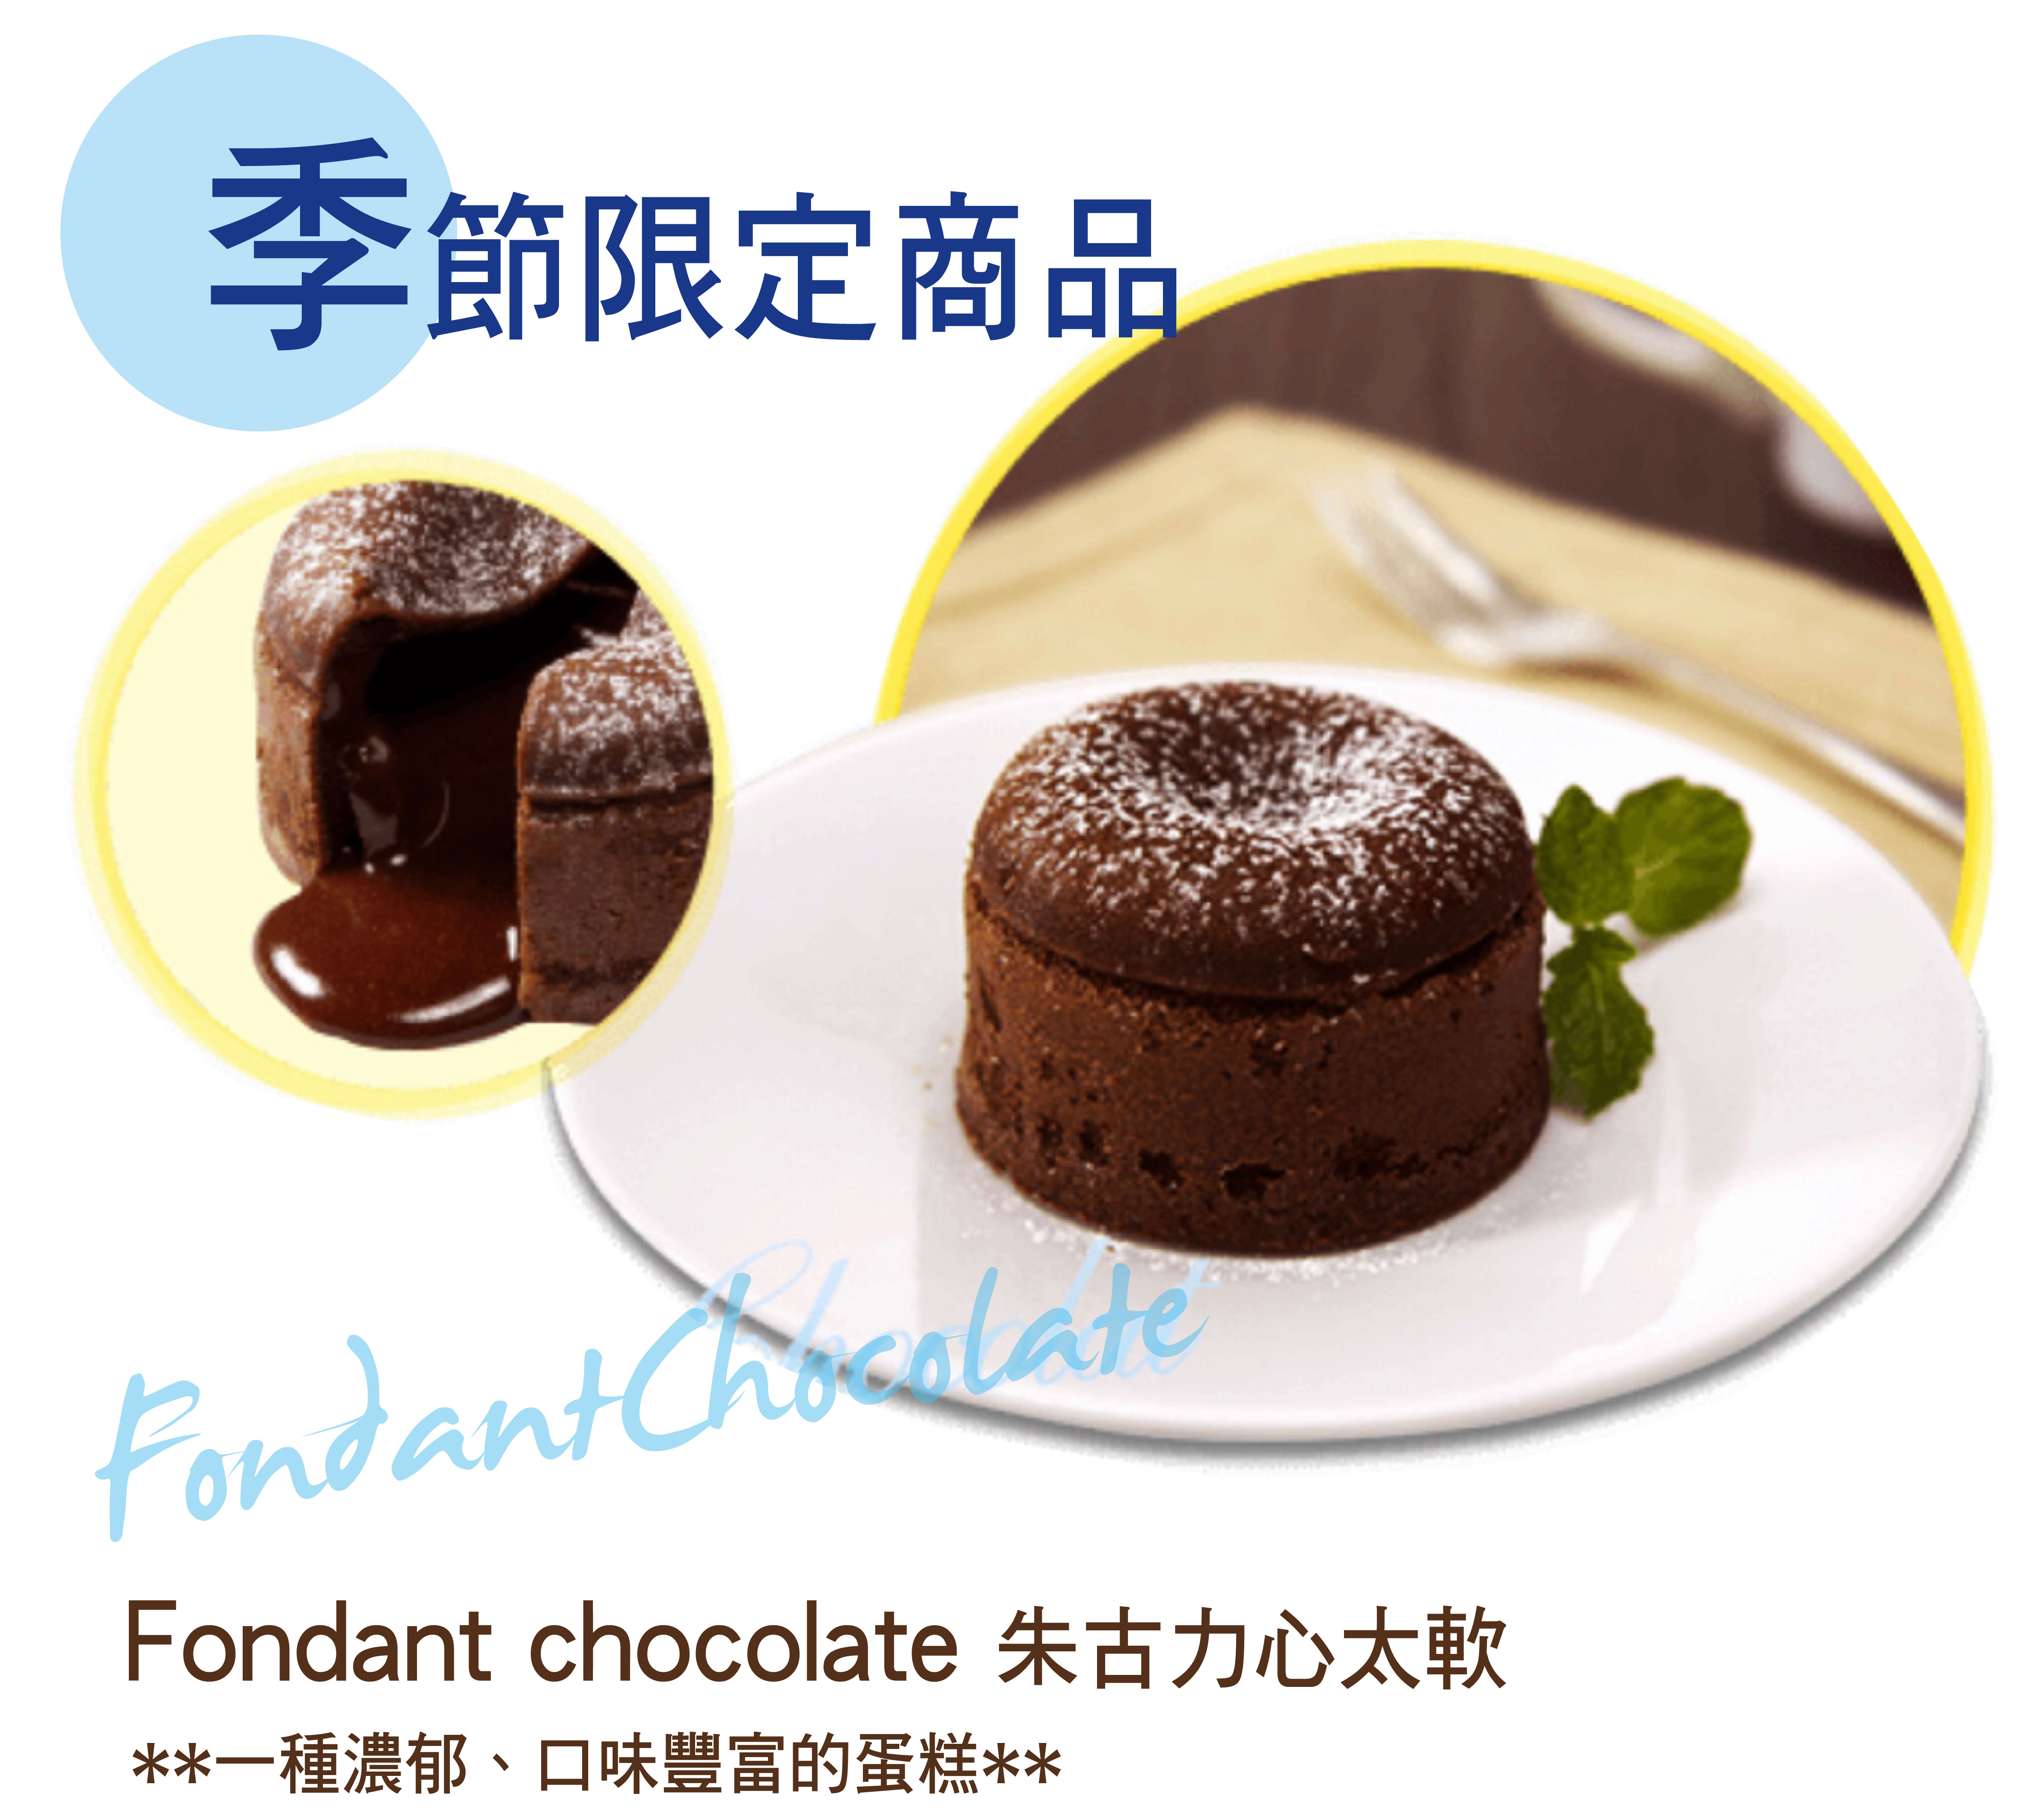 400-x-360-product-fondant-chocolate.jpg